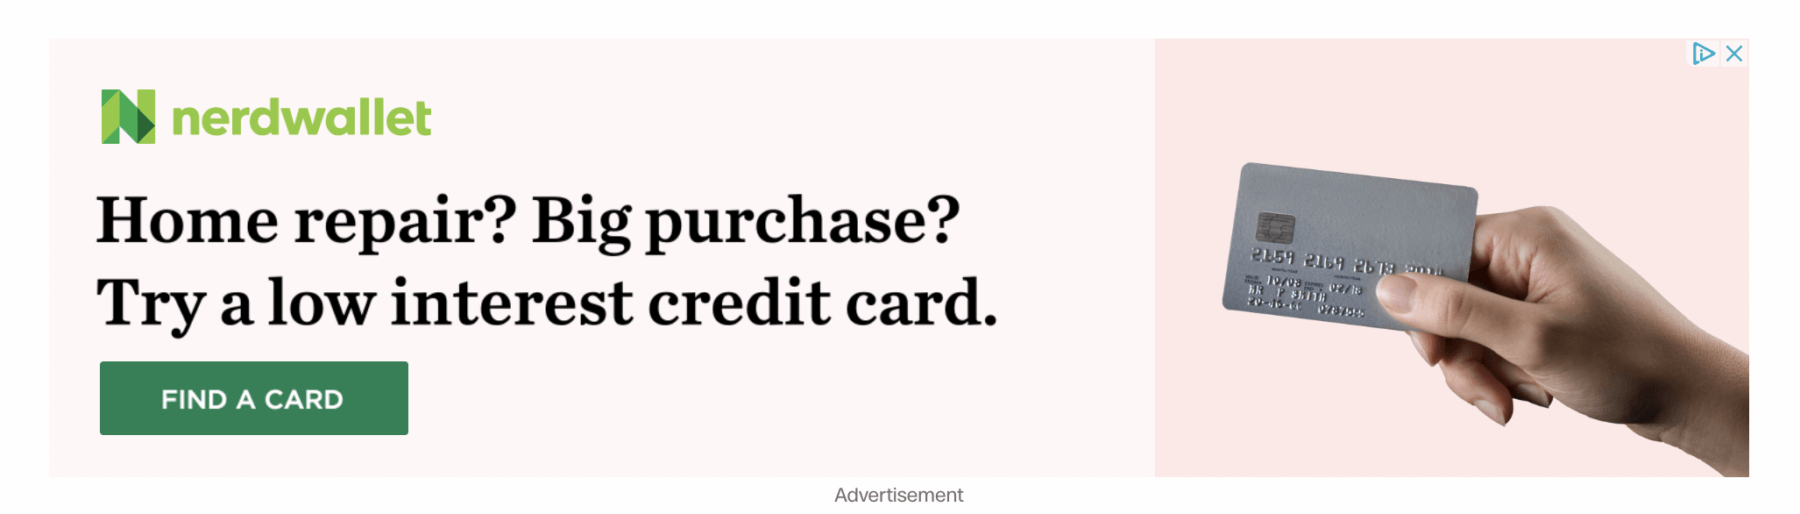 NerdWallet low interest credit card retargeting ad